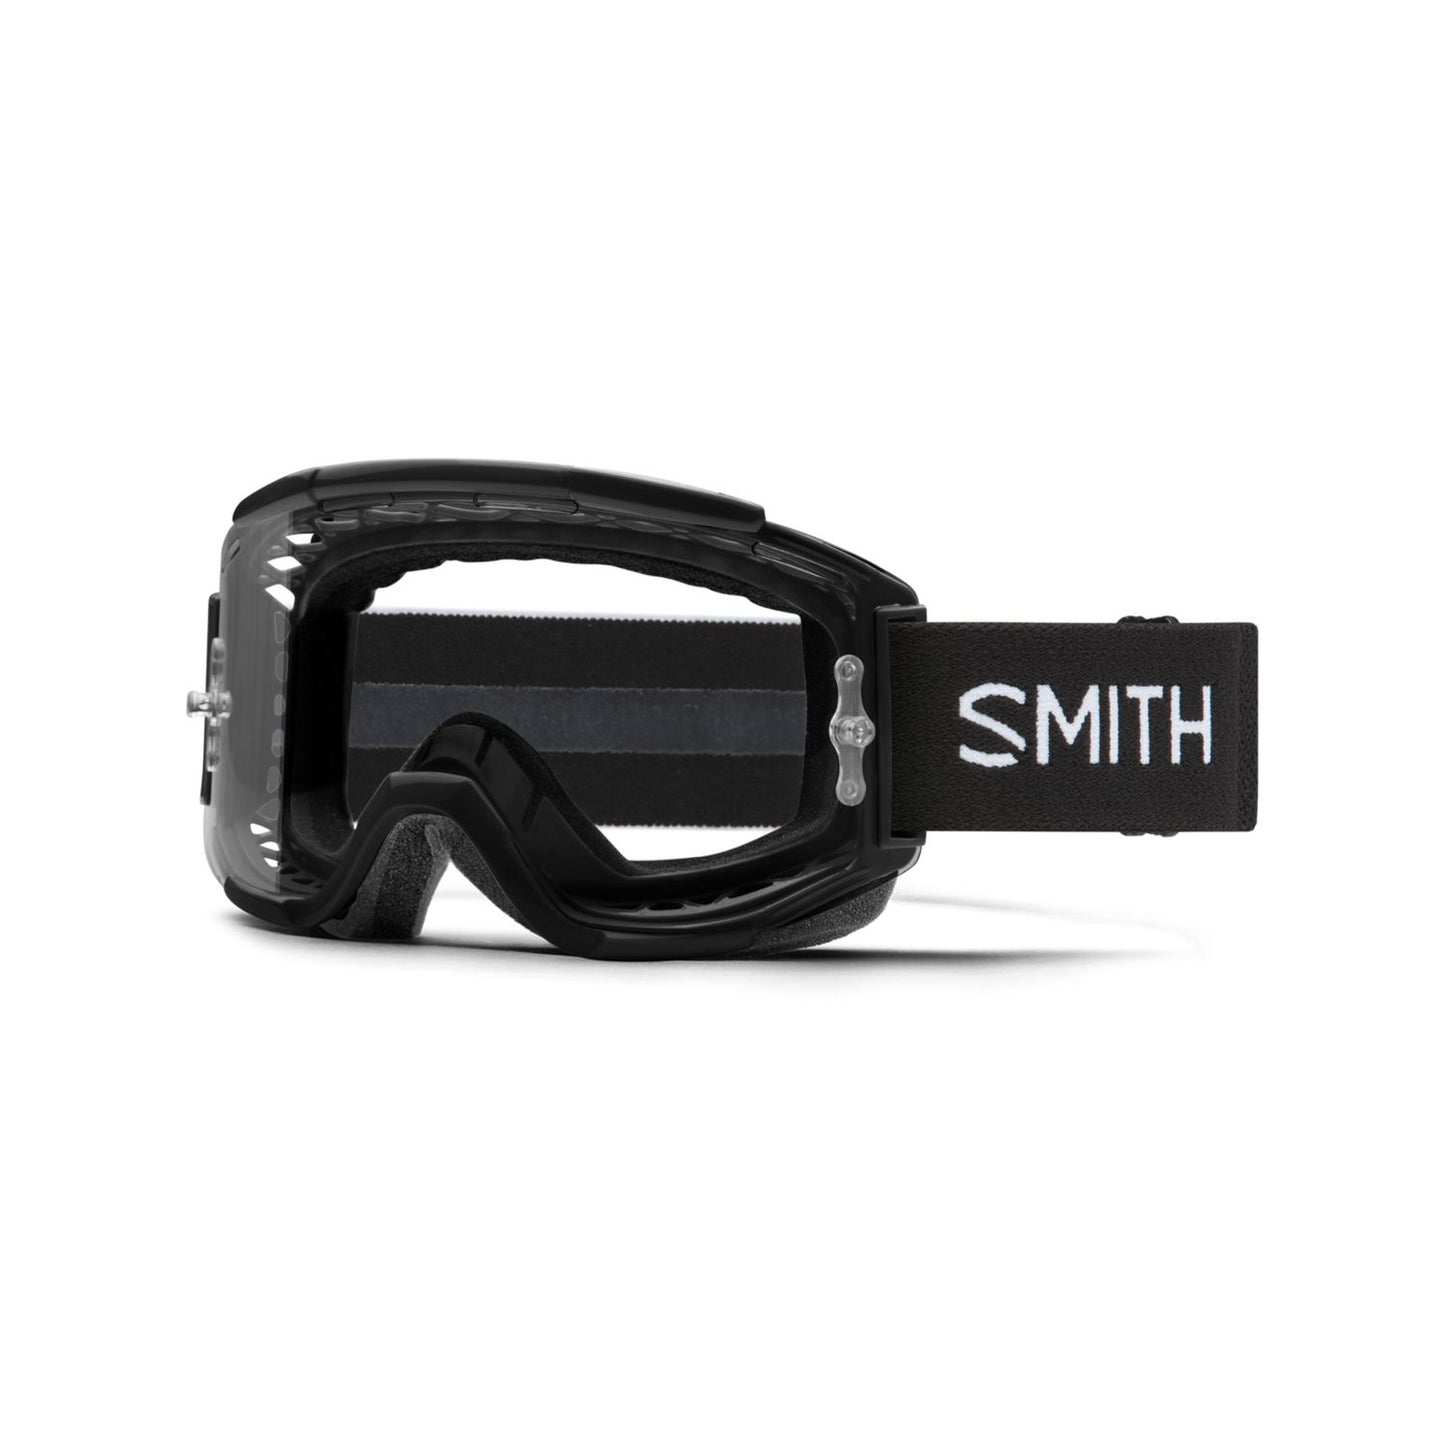 Smith Squad MTB Goggles Black / Clear Anti-Fog Bike Goggles